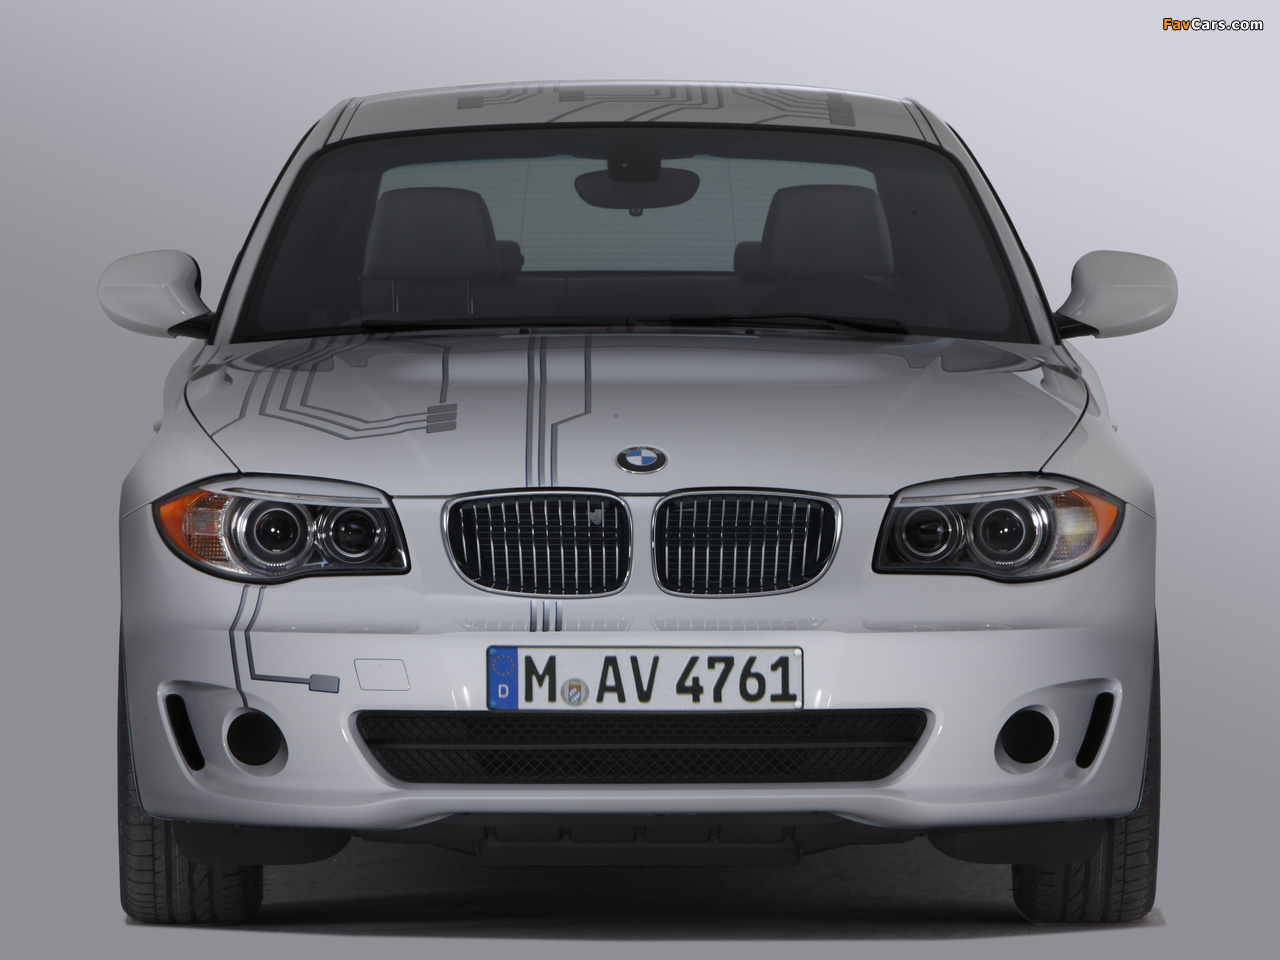 BMW 1 Series Coupe ActiveE Test Car (E82) 2011 images (1280 x 960)